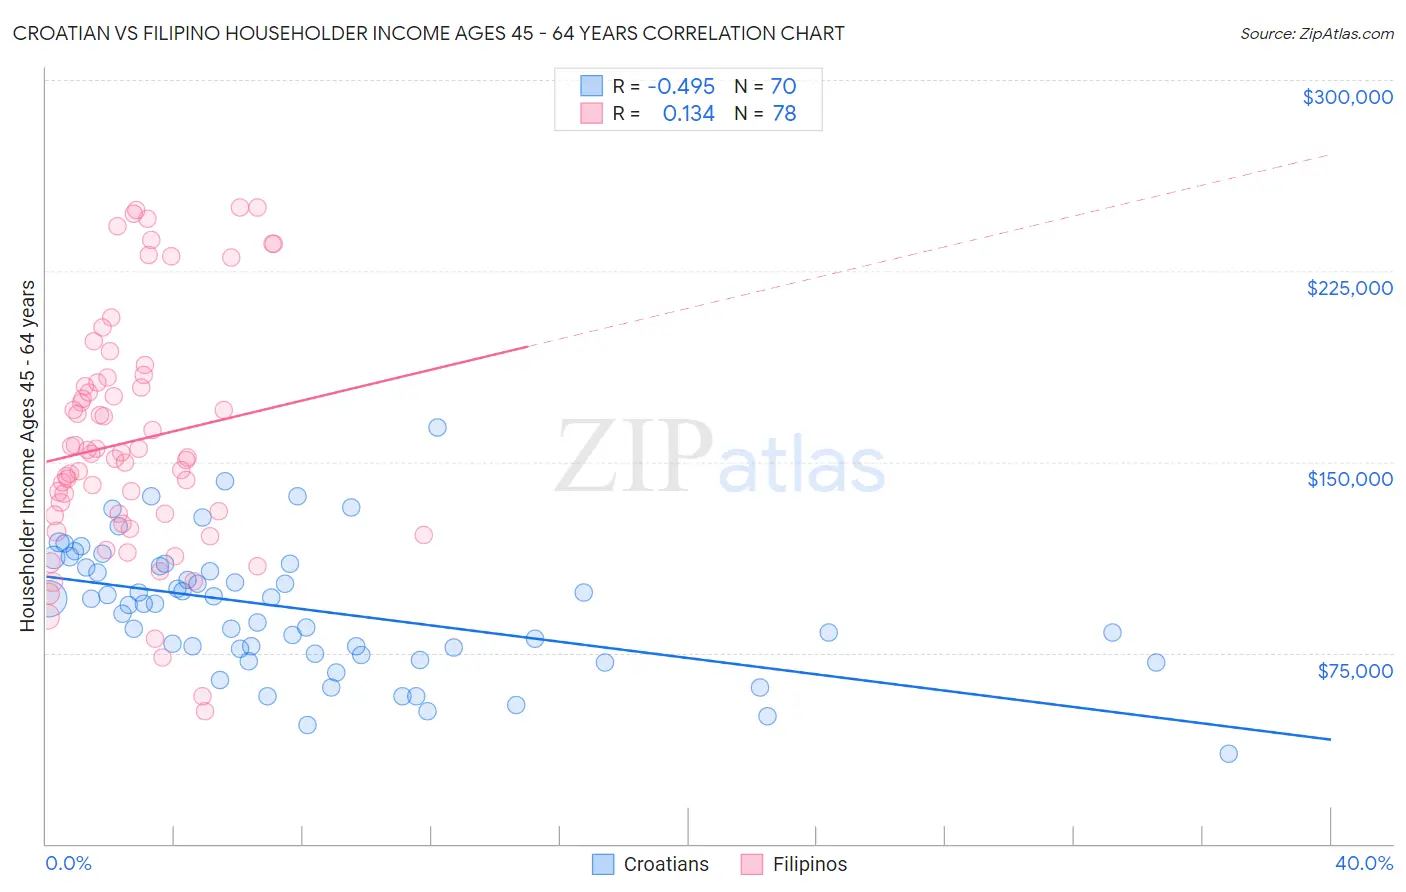 Croatian vs Filipino Householder Income Ages 45 - 64 years